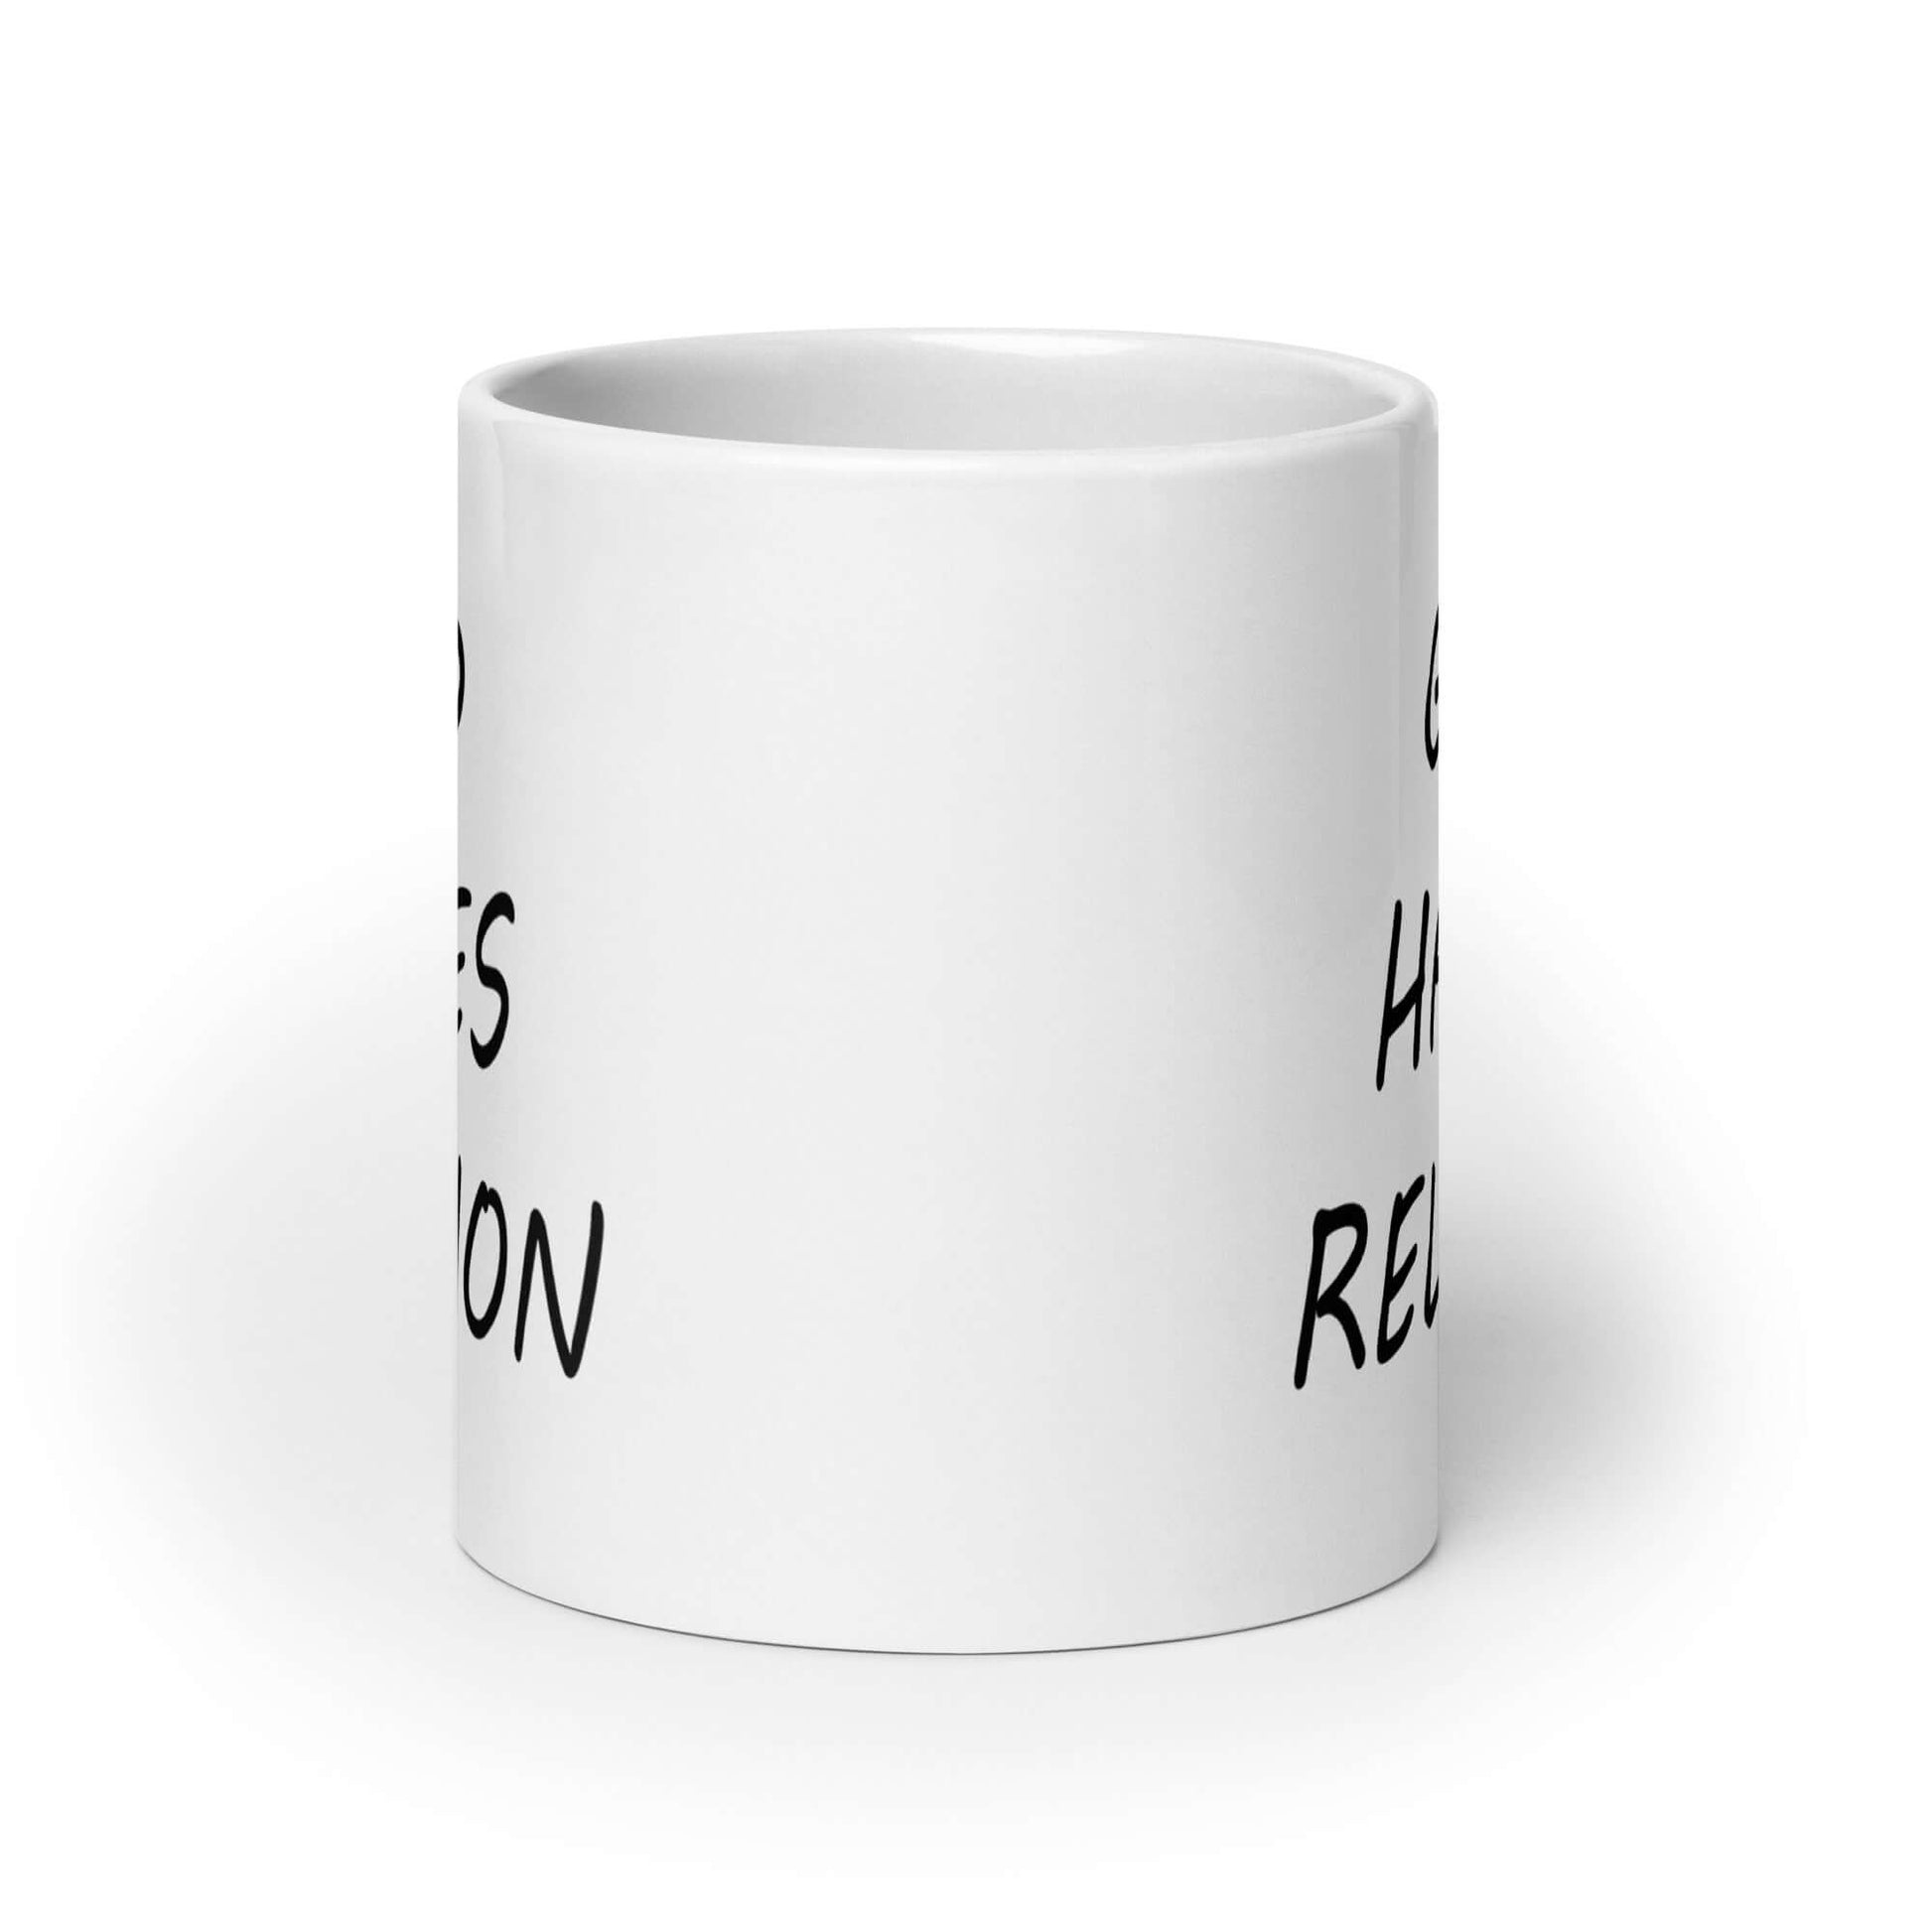 White ceramic mug with with the words God hates religion printed on both sides of the mug.